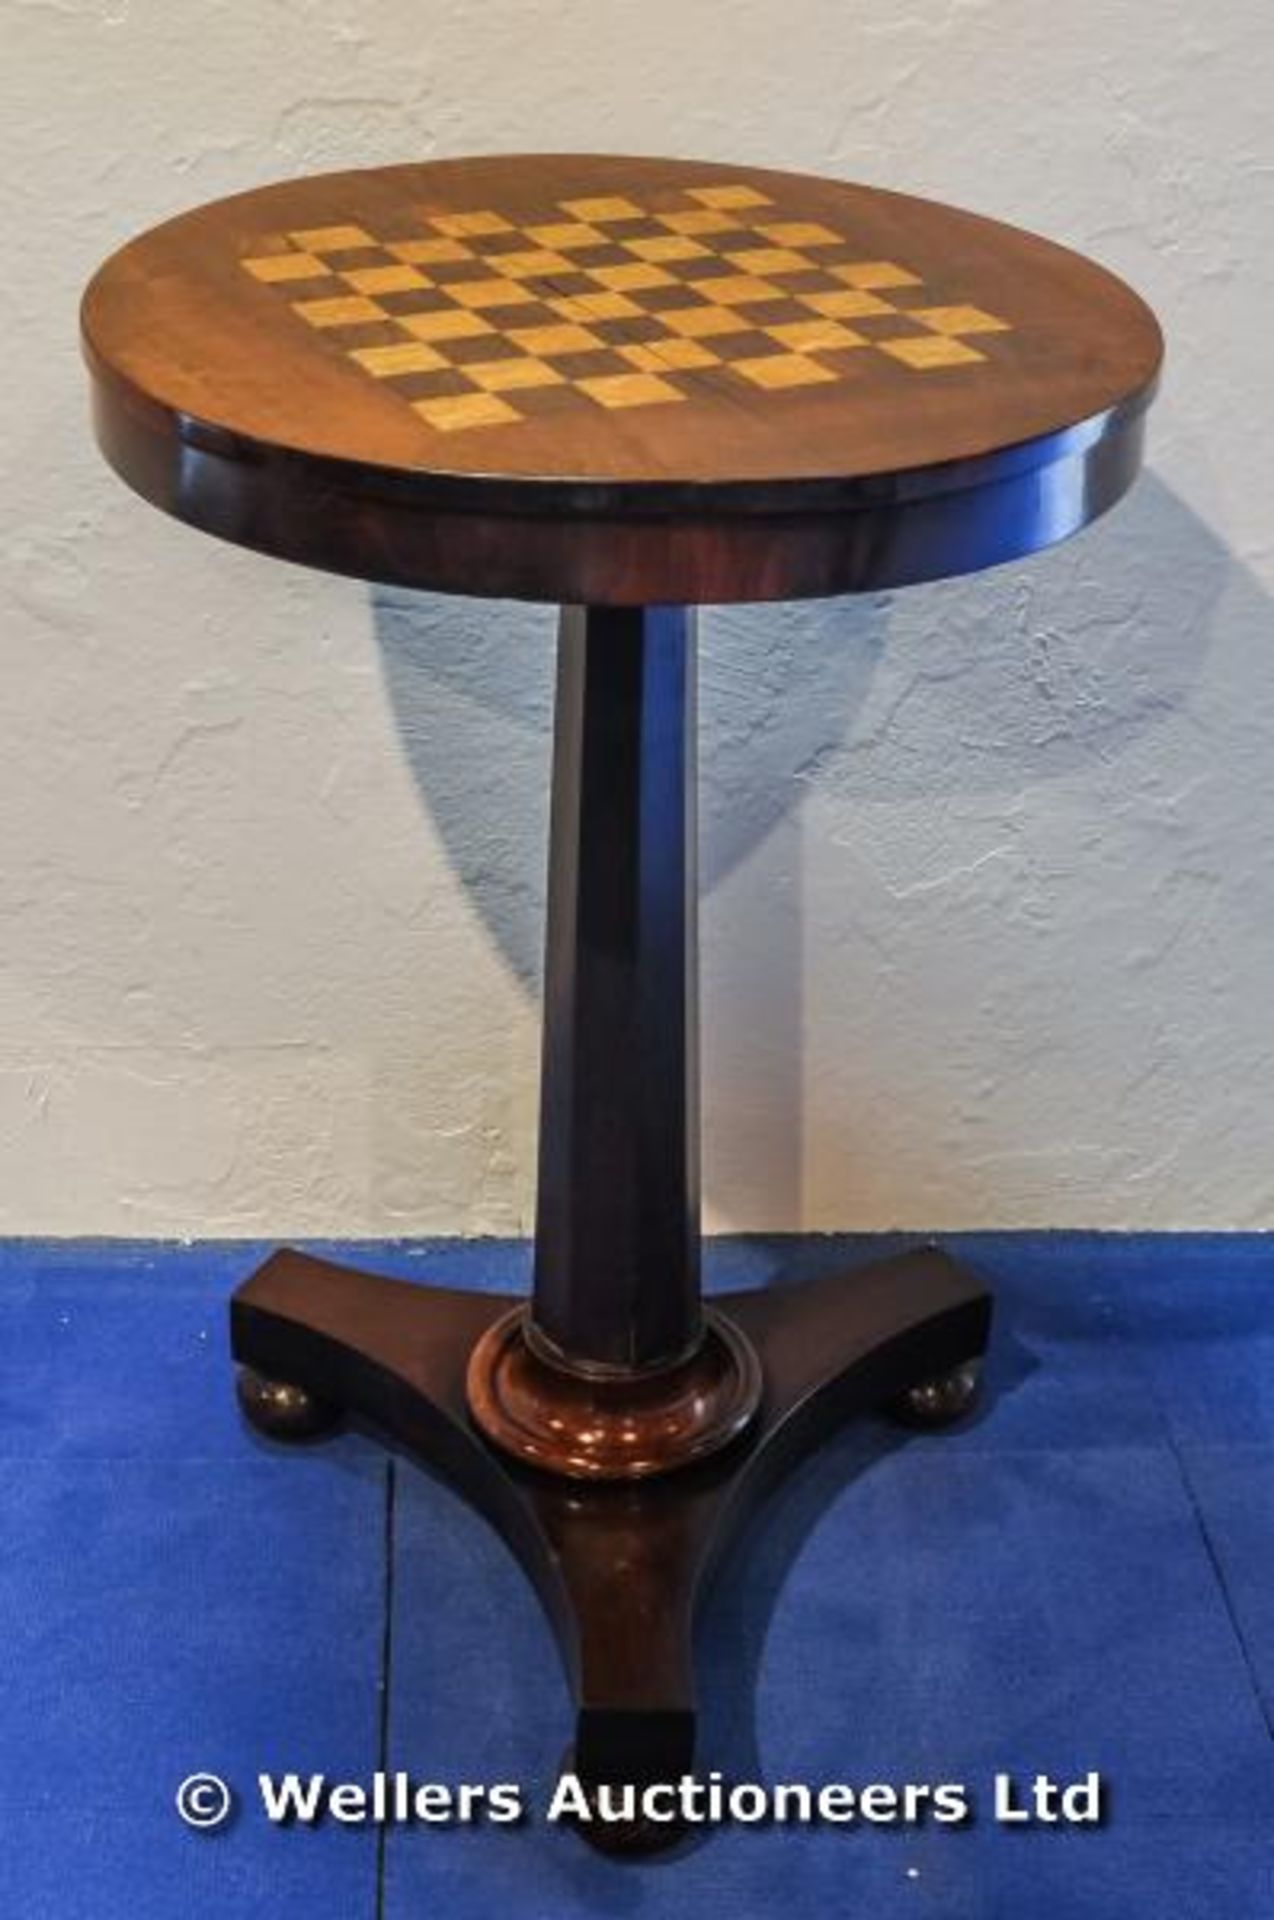 C1850 circular inlaid chess table on fluted column sitting on triangular base with bun feet